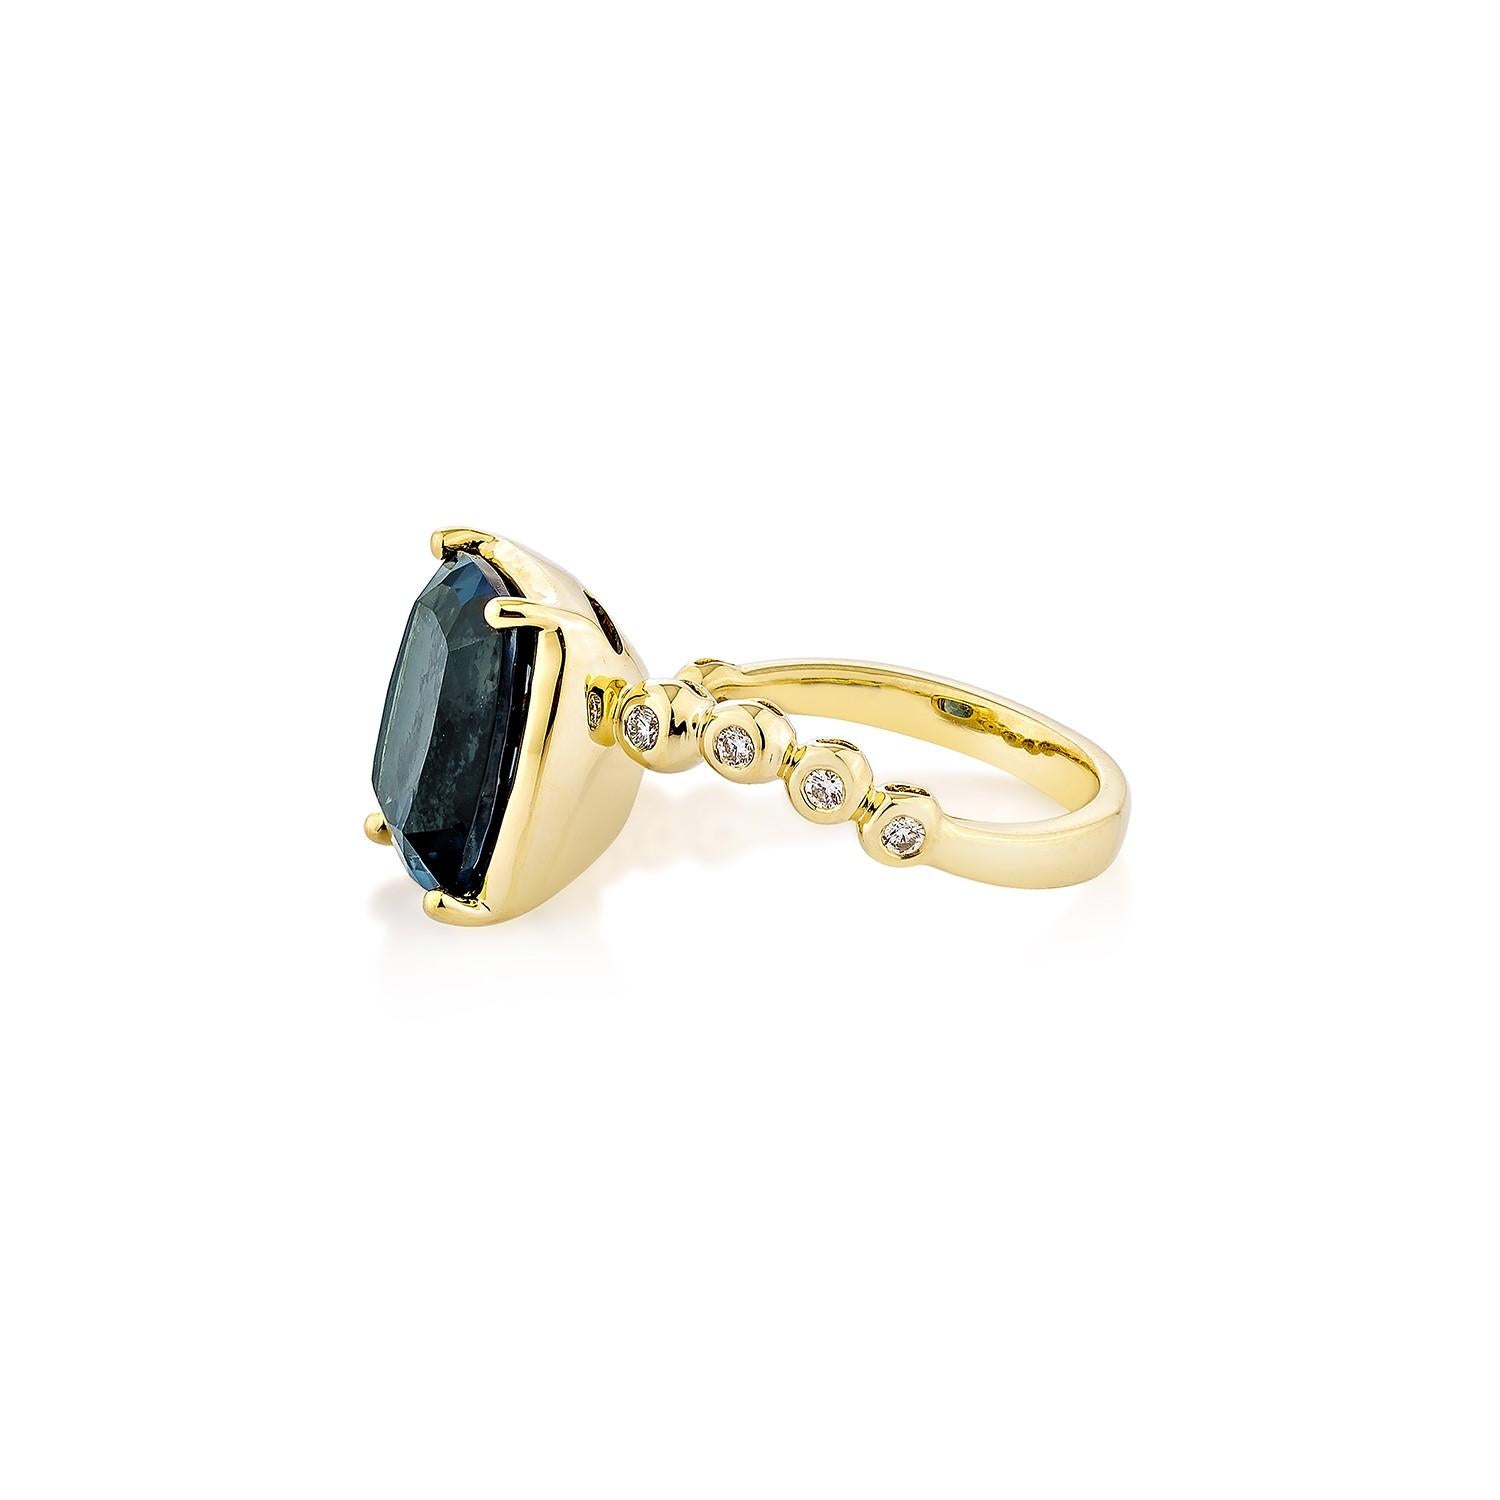 Cushion Cut 5.18 Carat London Blue Topaz Fancy Ring in 18Karat Yellow Gold with Diamond. For Sale